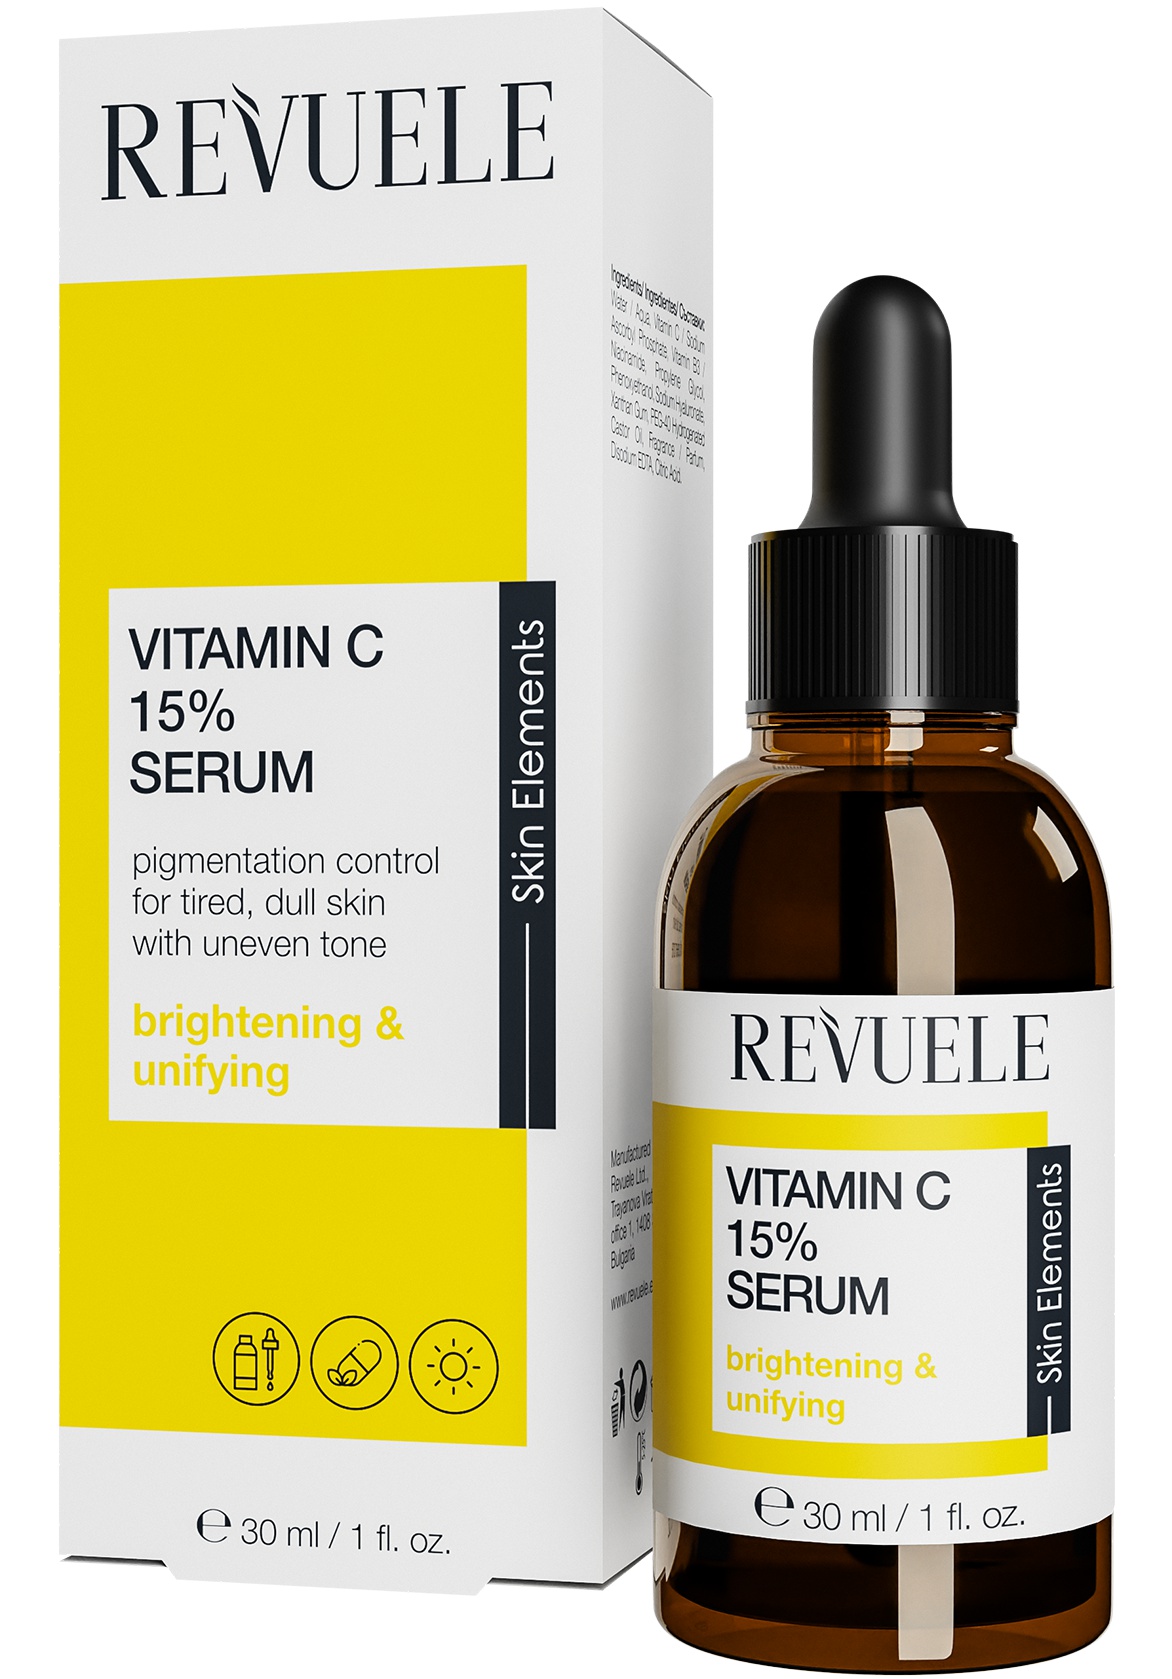 Revuele Vitamin C 15% Serum